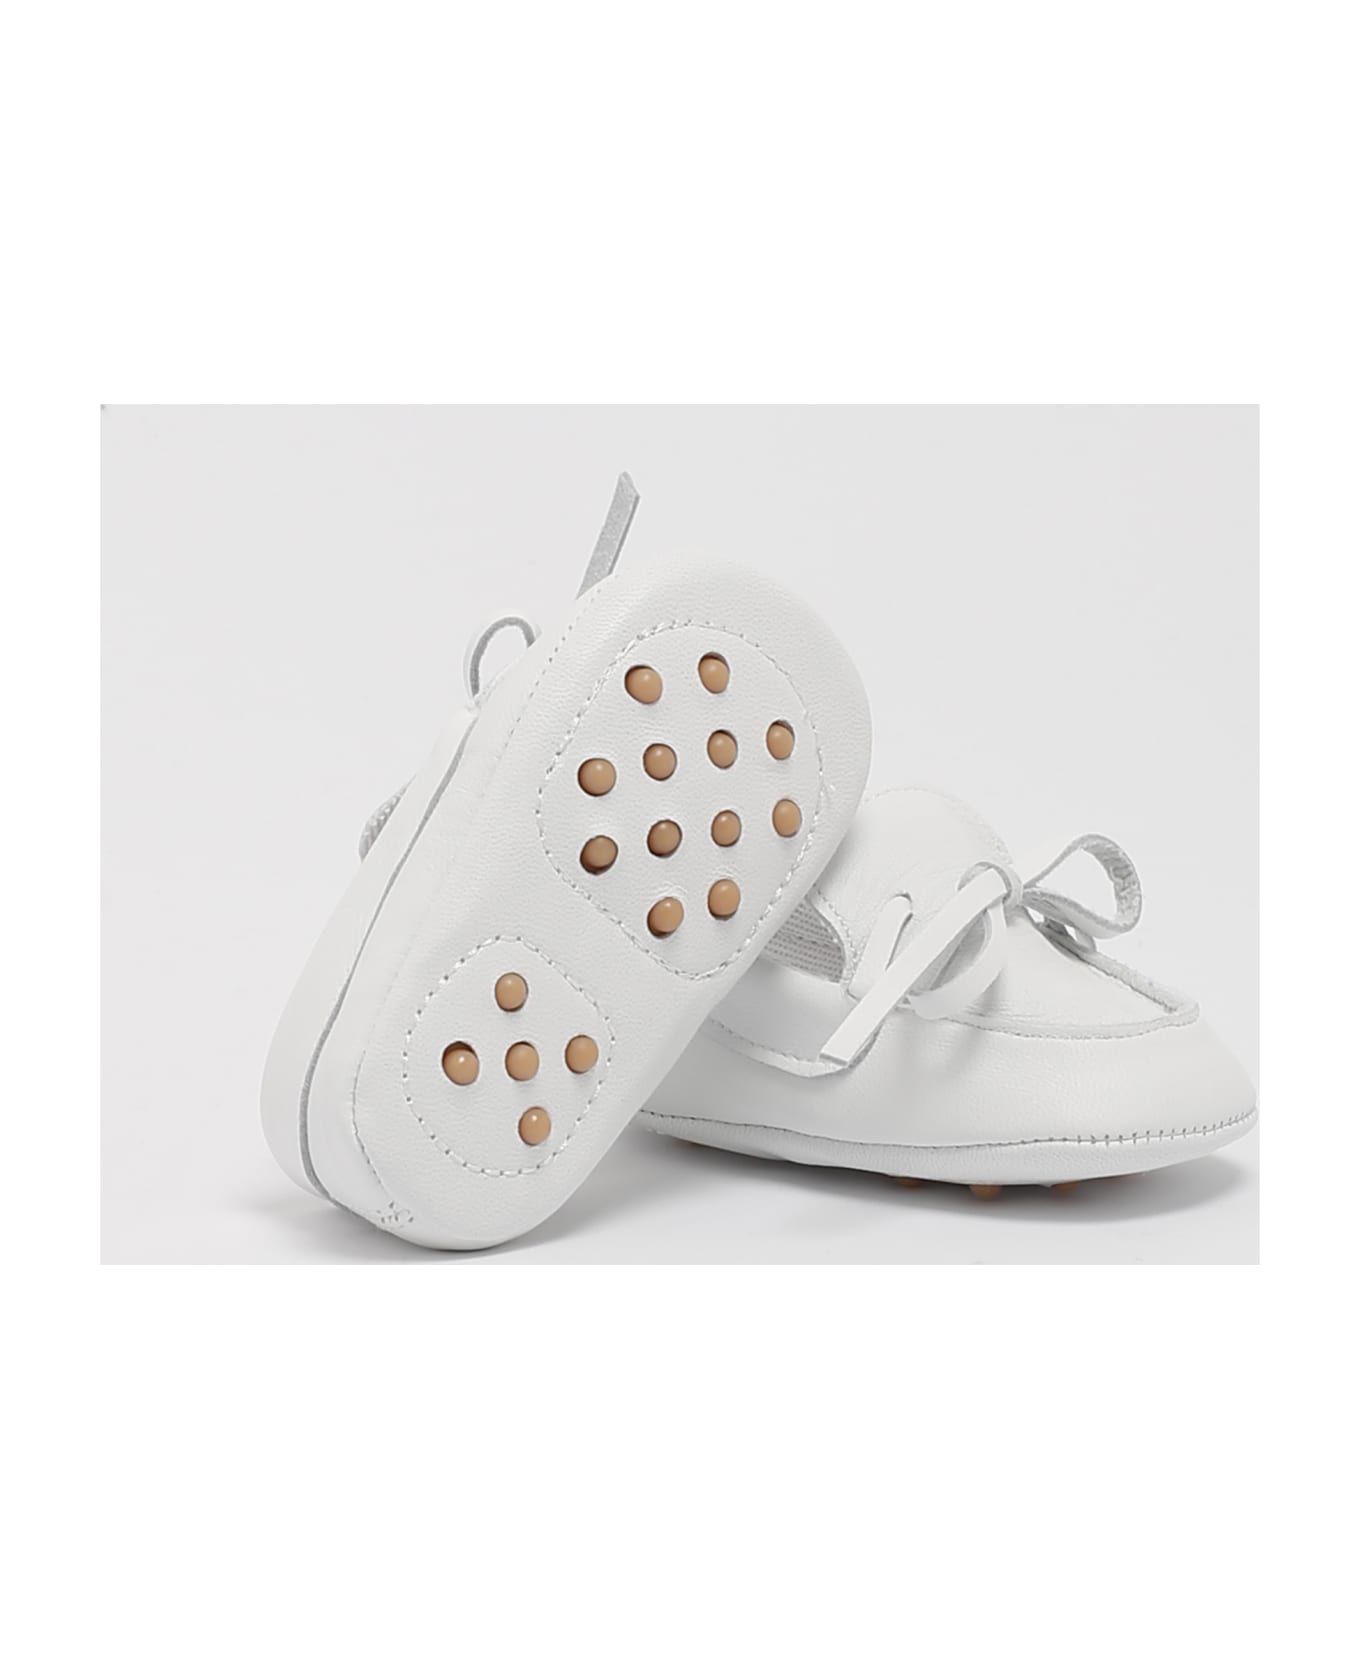 leBebé Baby Shoes Flat Shoes - BIANCO